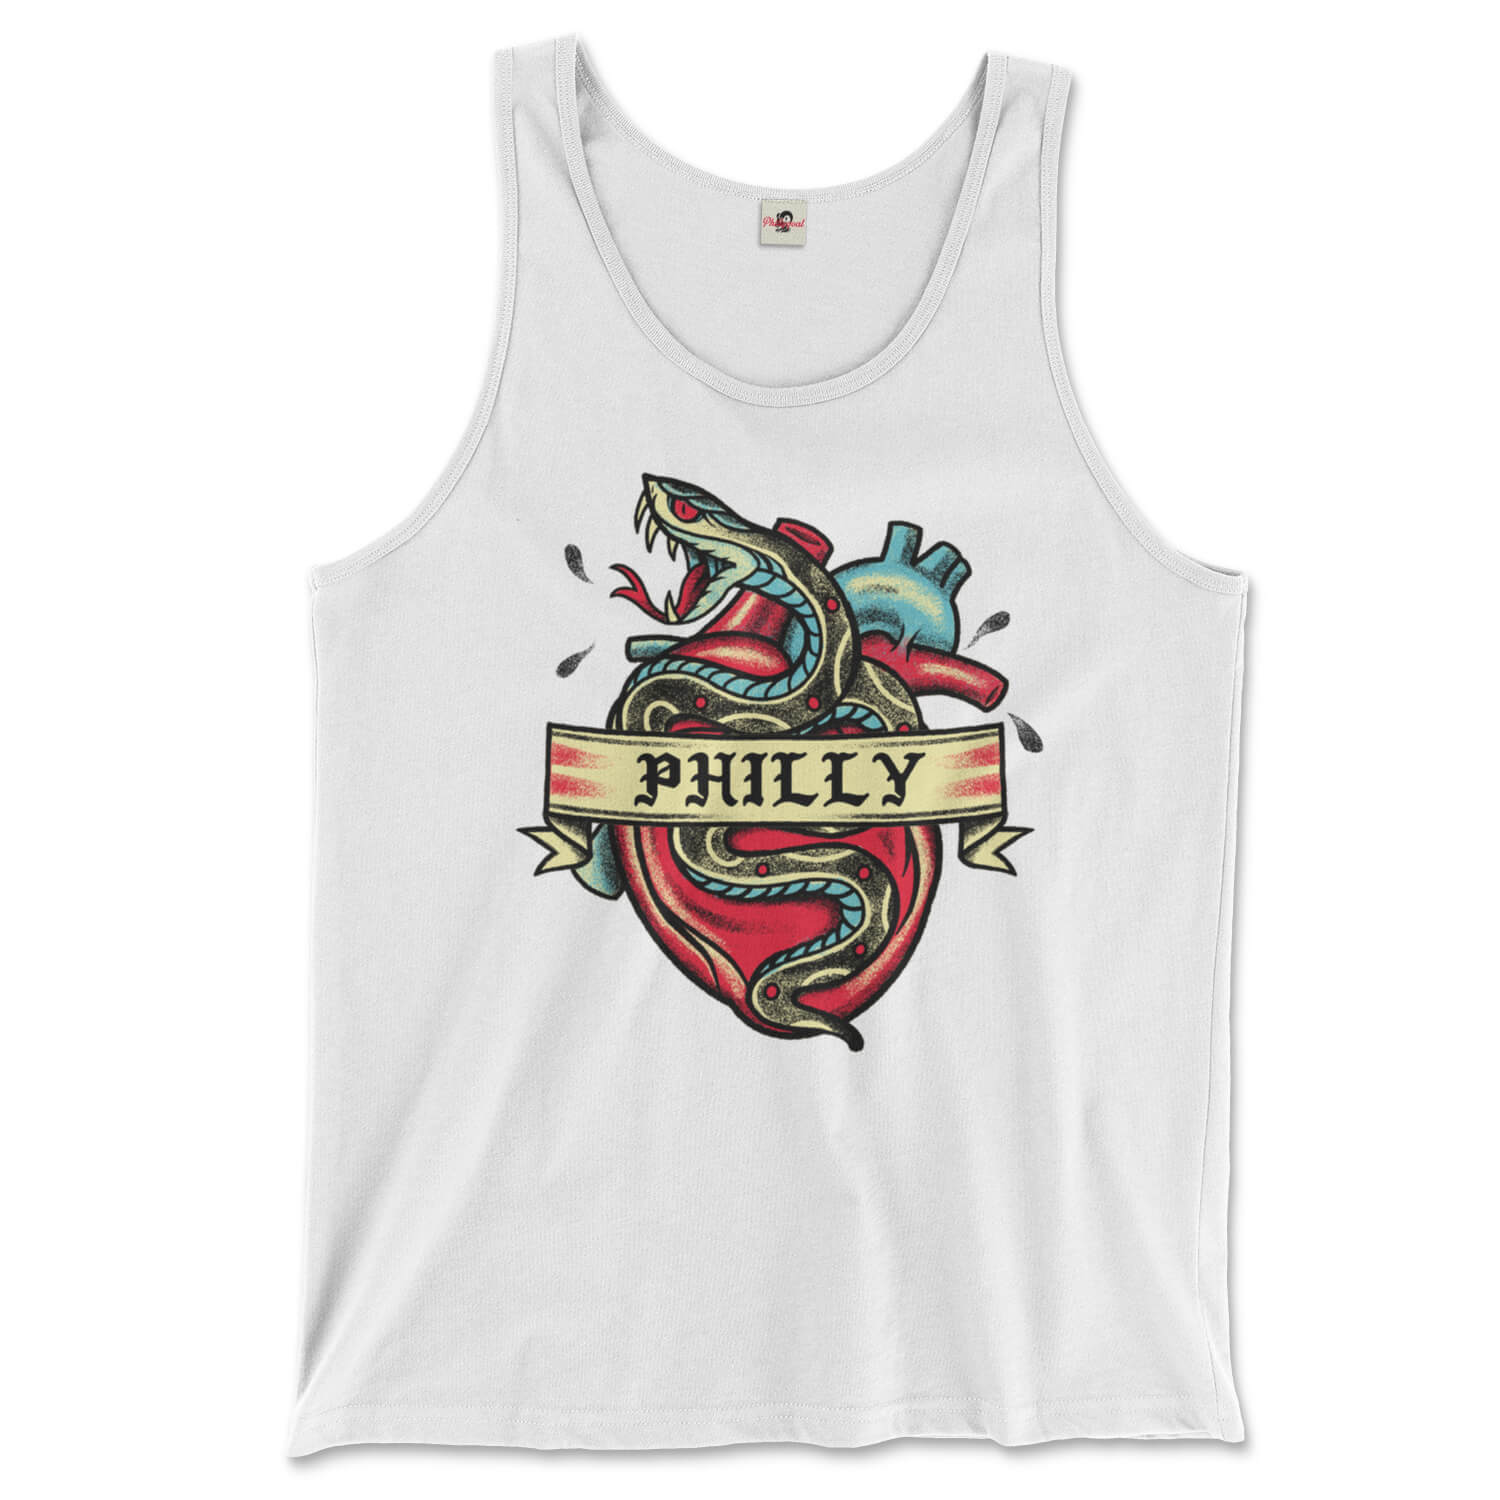 Philadelphia philly snake heart tattoo on awhite tank top from Phillygoat